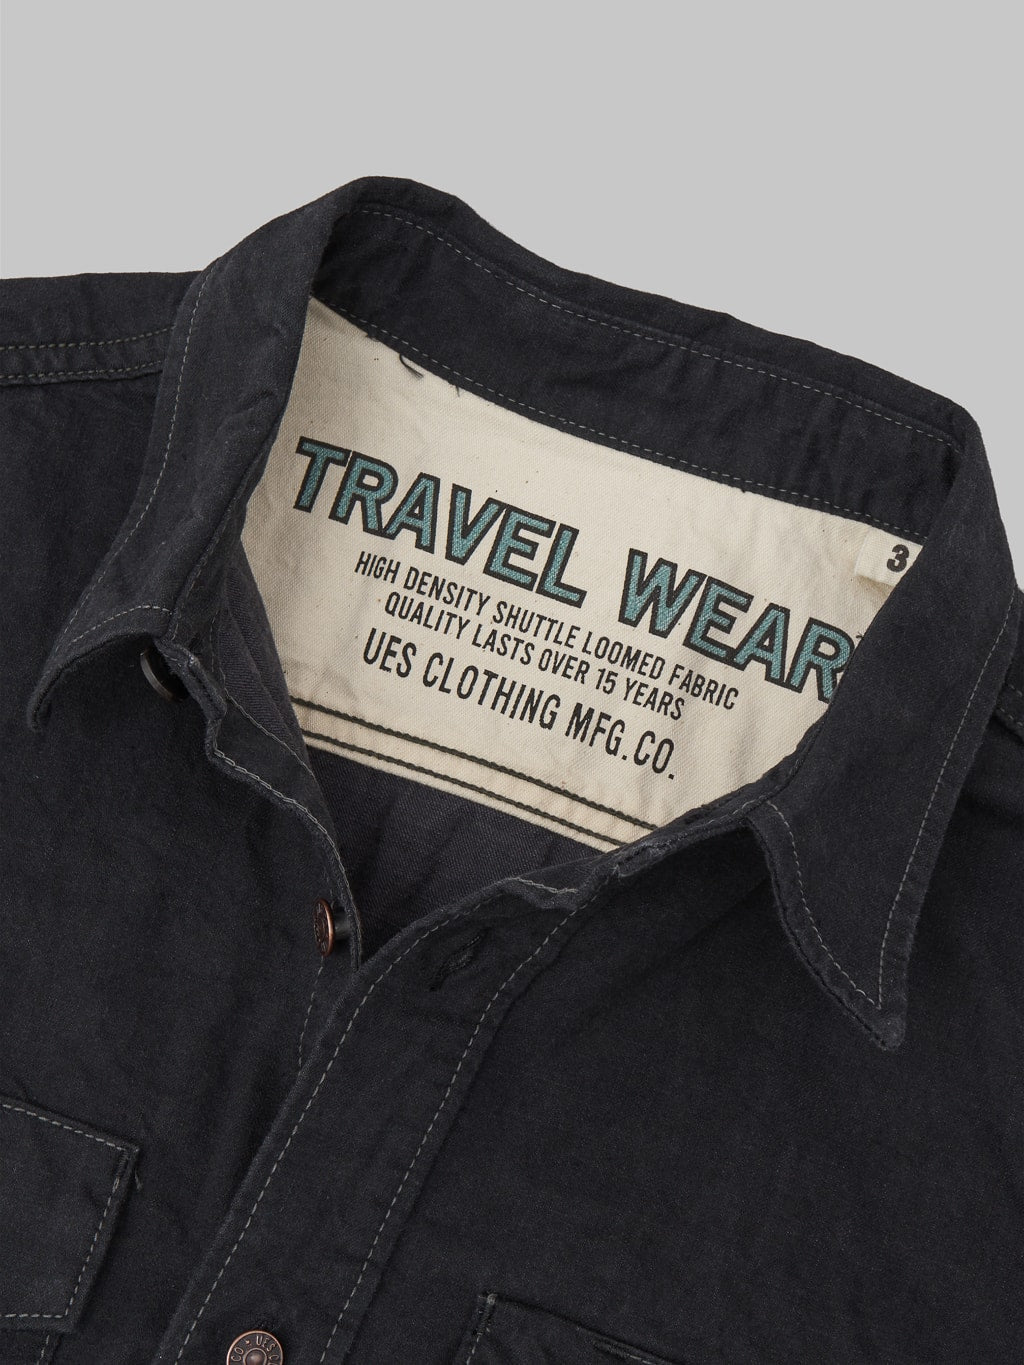 UES traveling shirt black interior brand tag